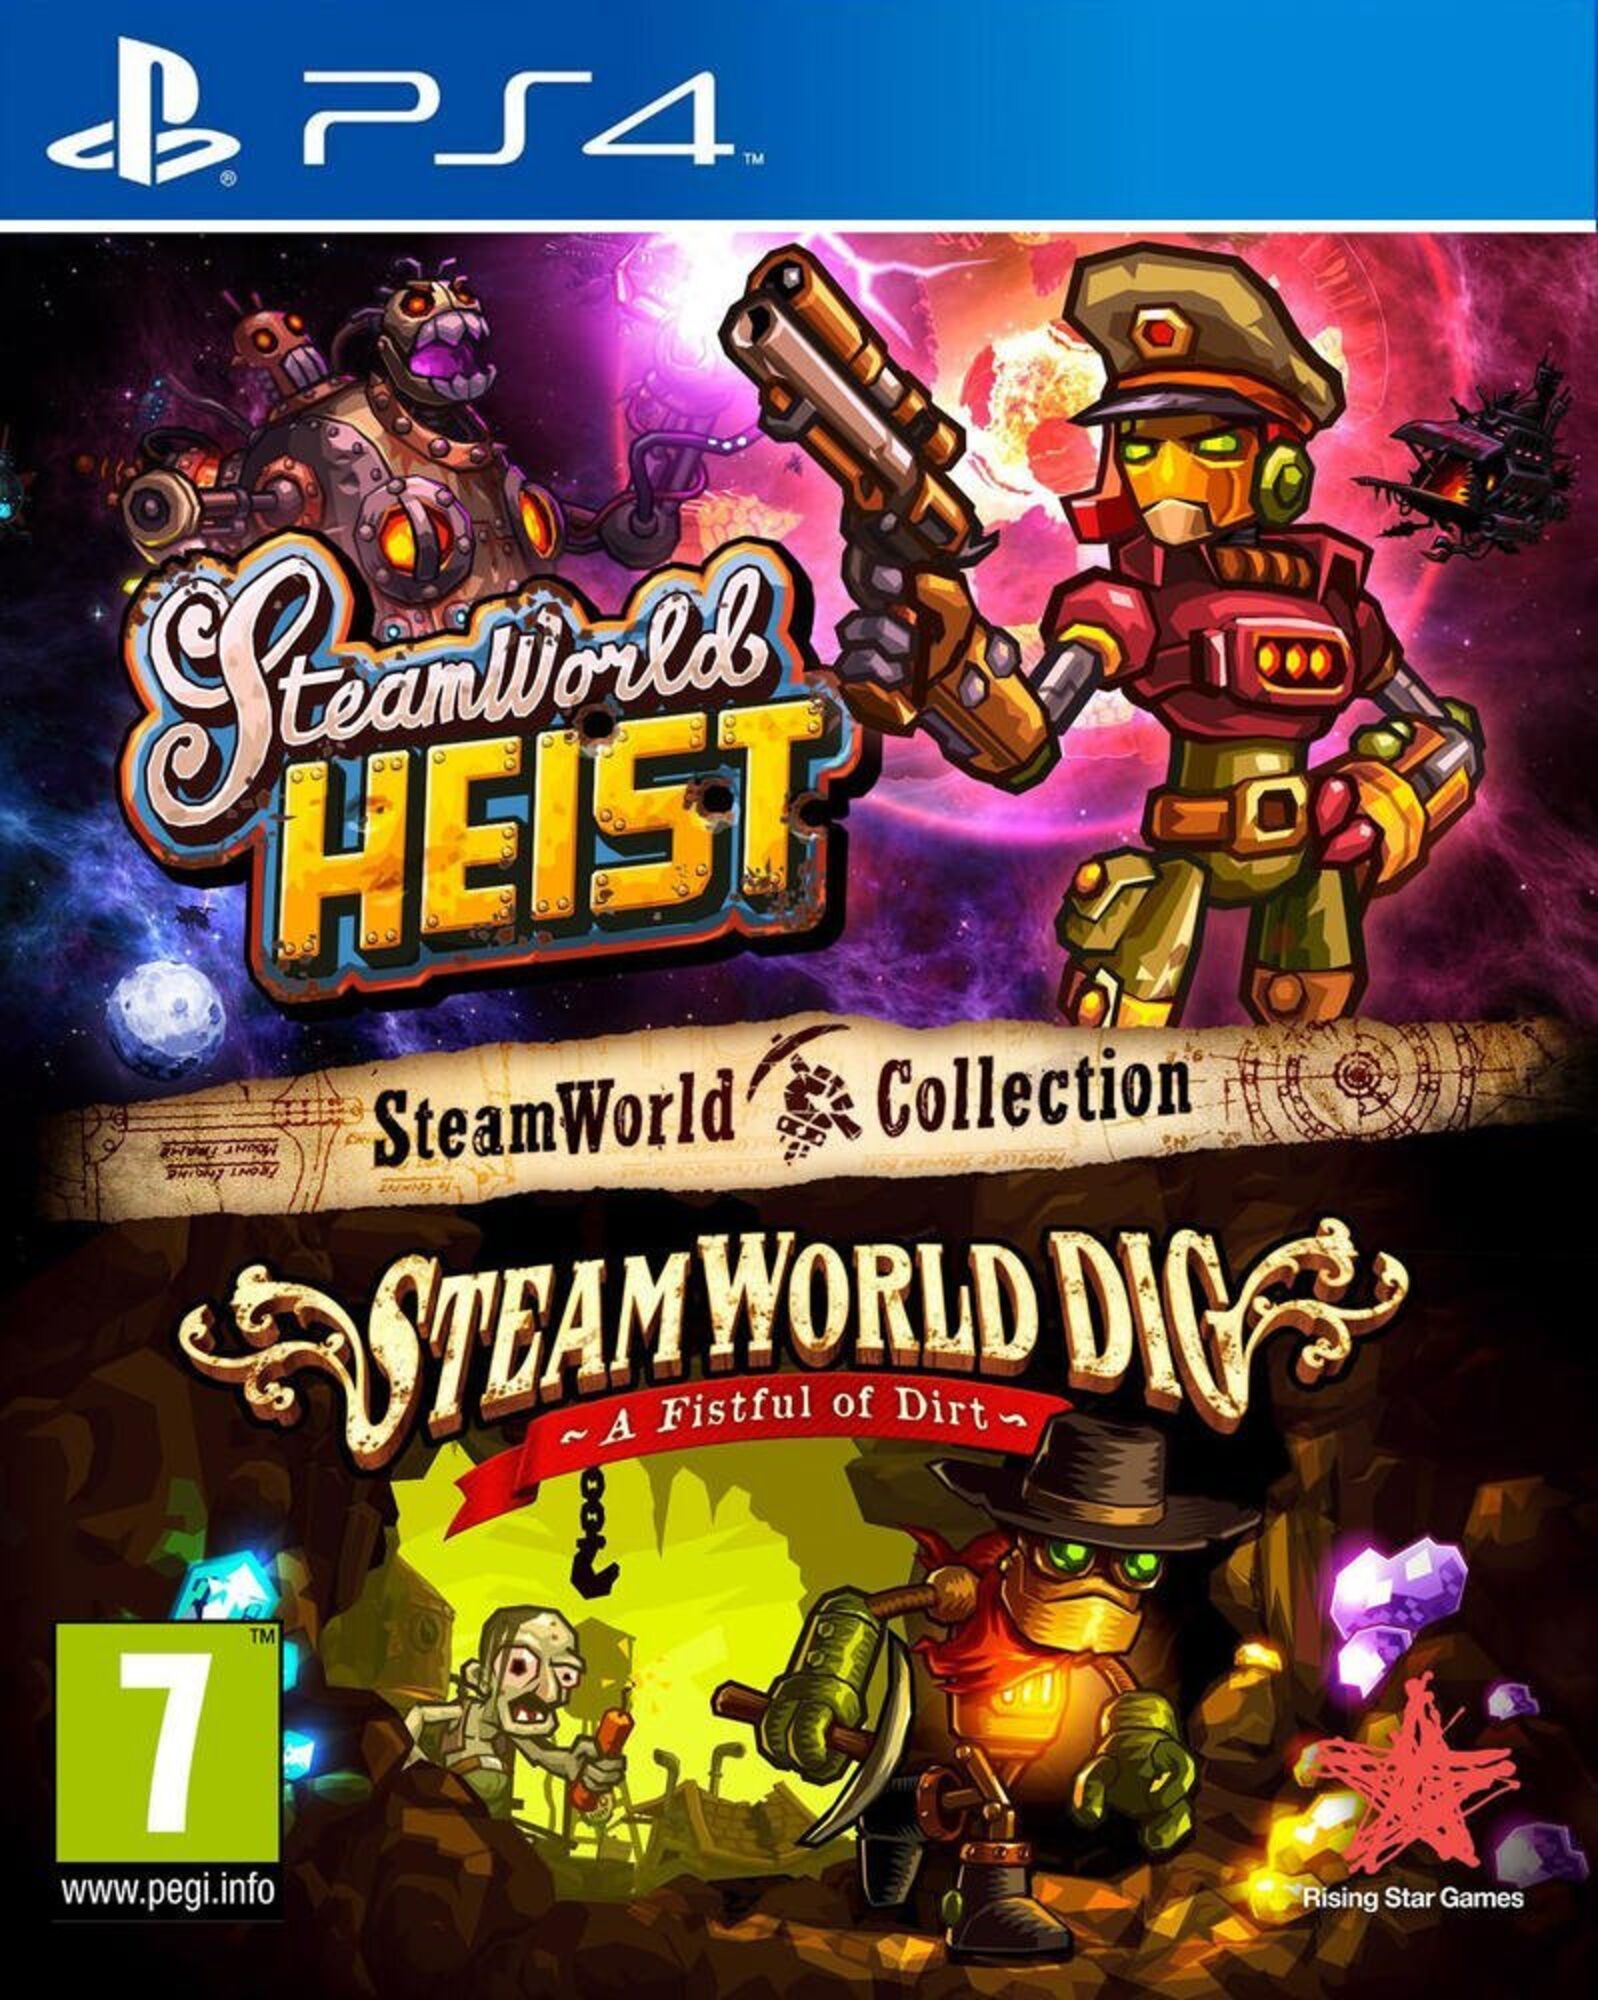 steamworld dig vs heist